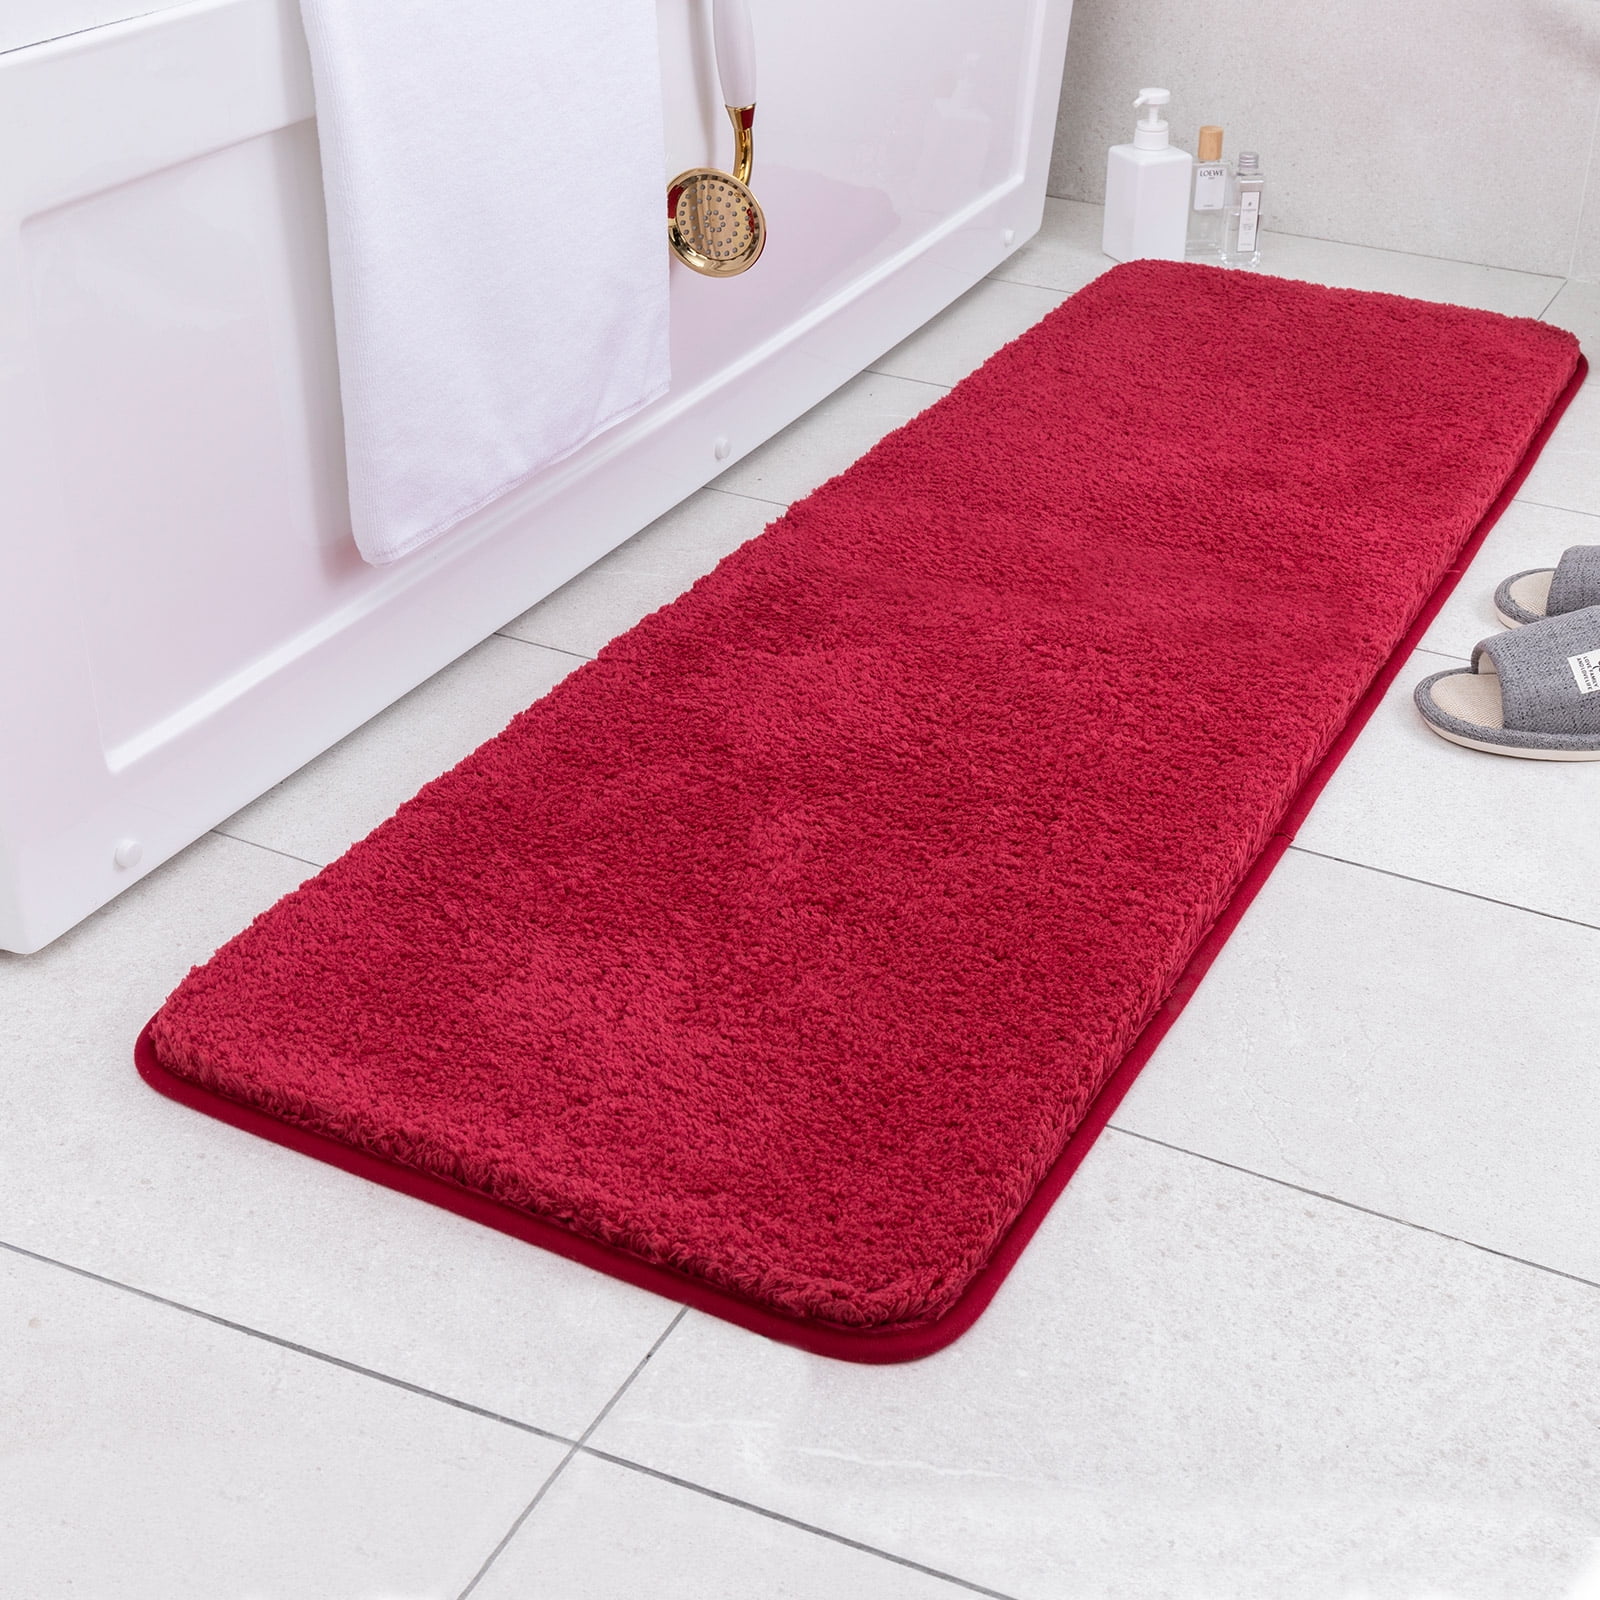 15X23" Bathroom Floor Non-Slip Bath Mat Red Carpet Star Dream Soft Door Mats NEw